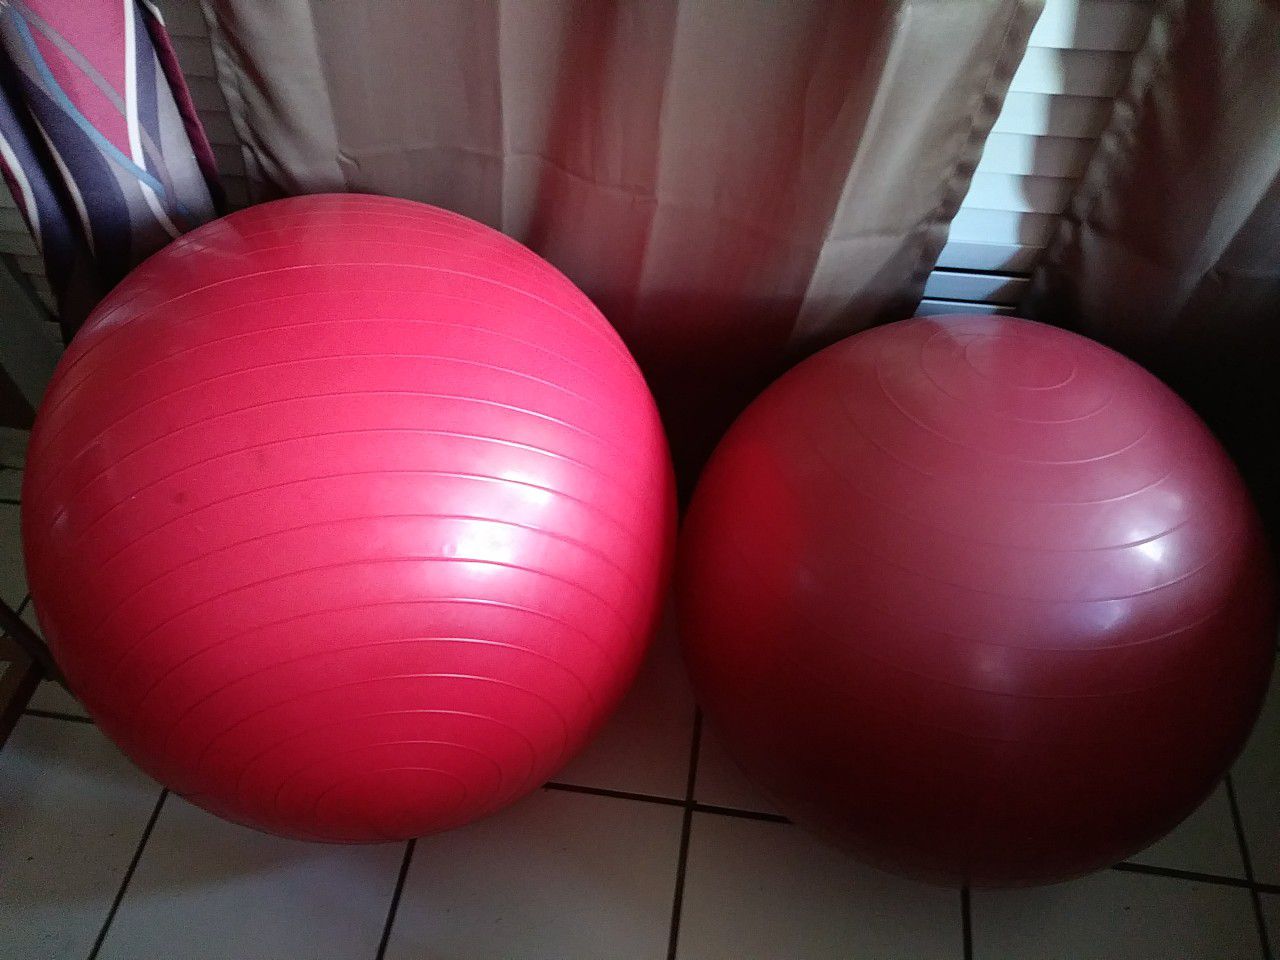 Yoga/exercise balls